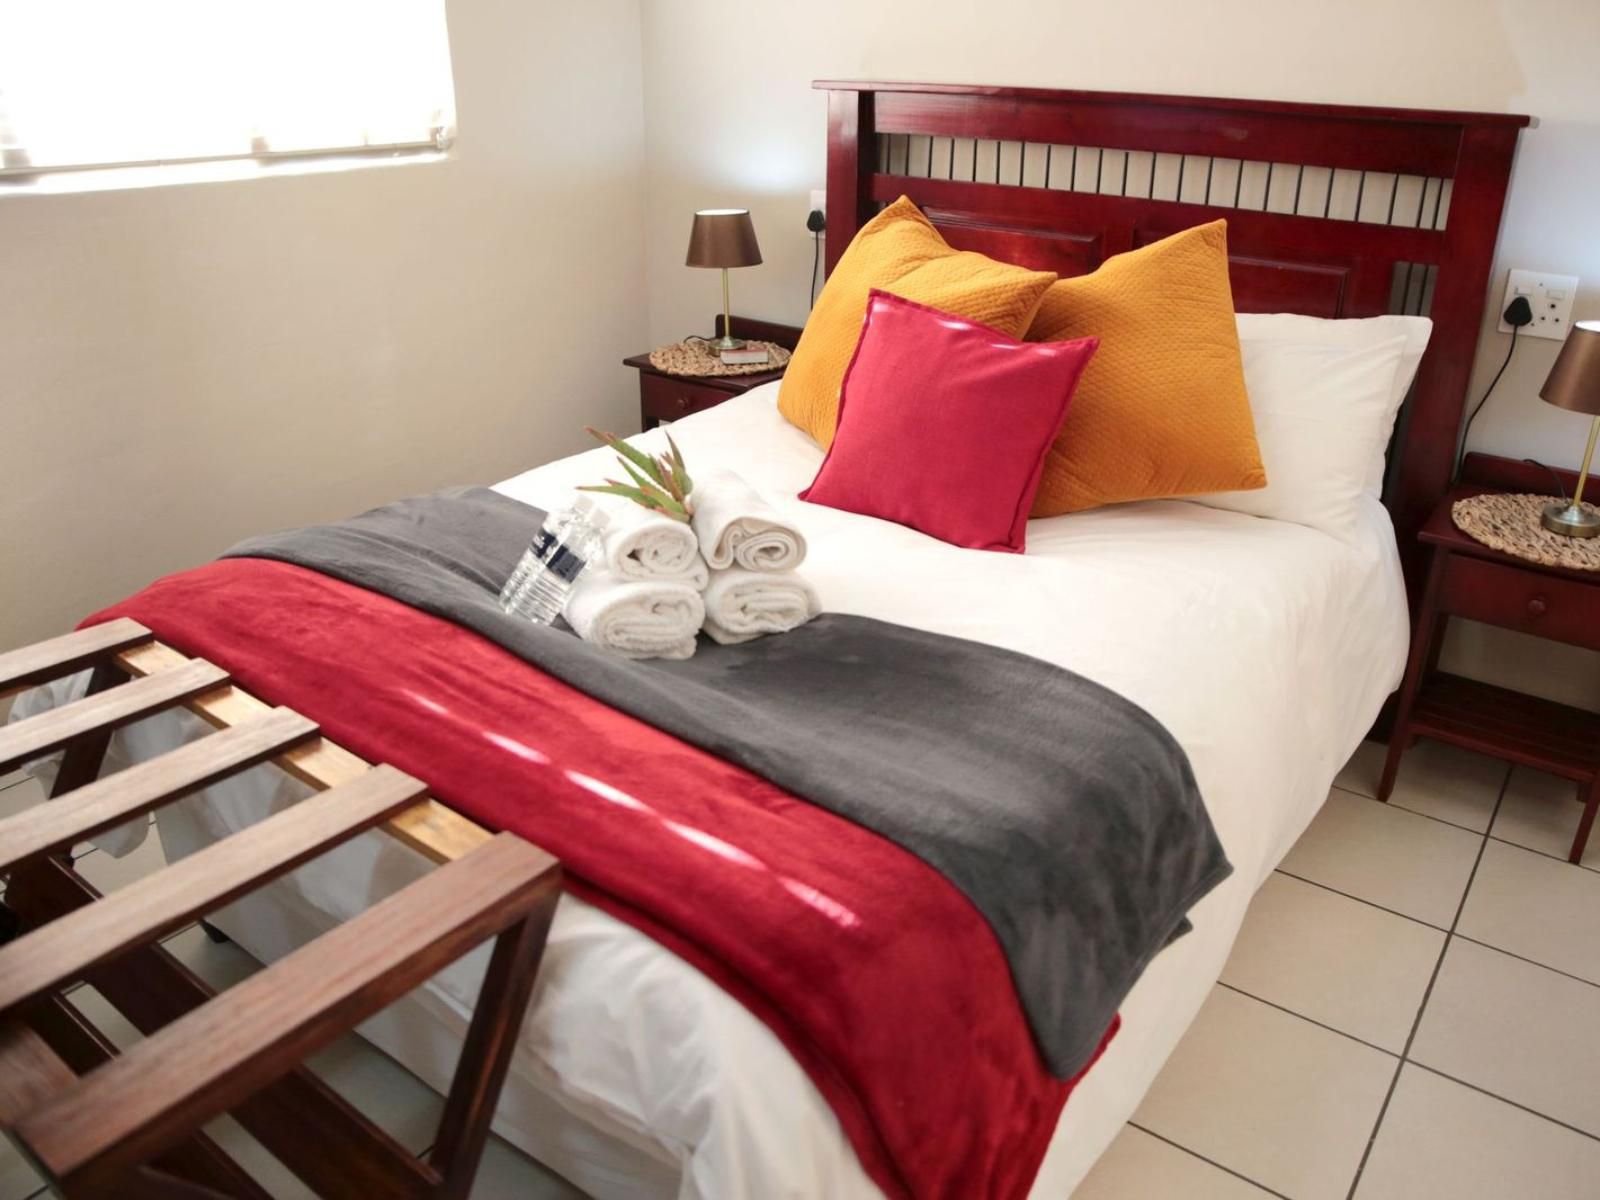 Alucarni Guest House Blydeville Upington Northern Cape South Africa Bedroom